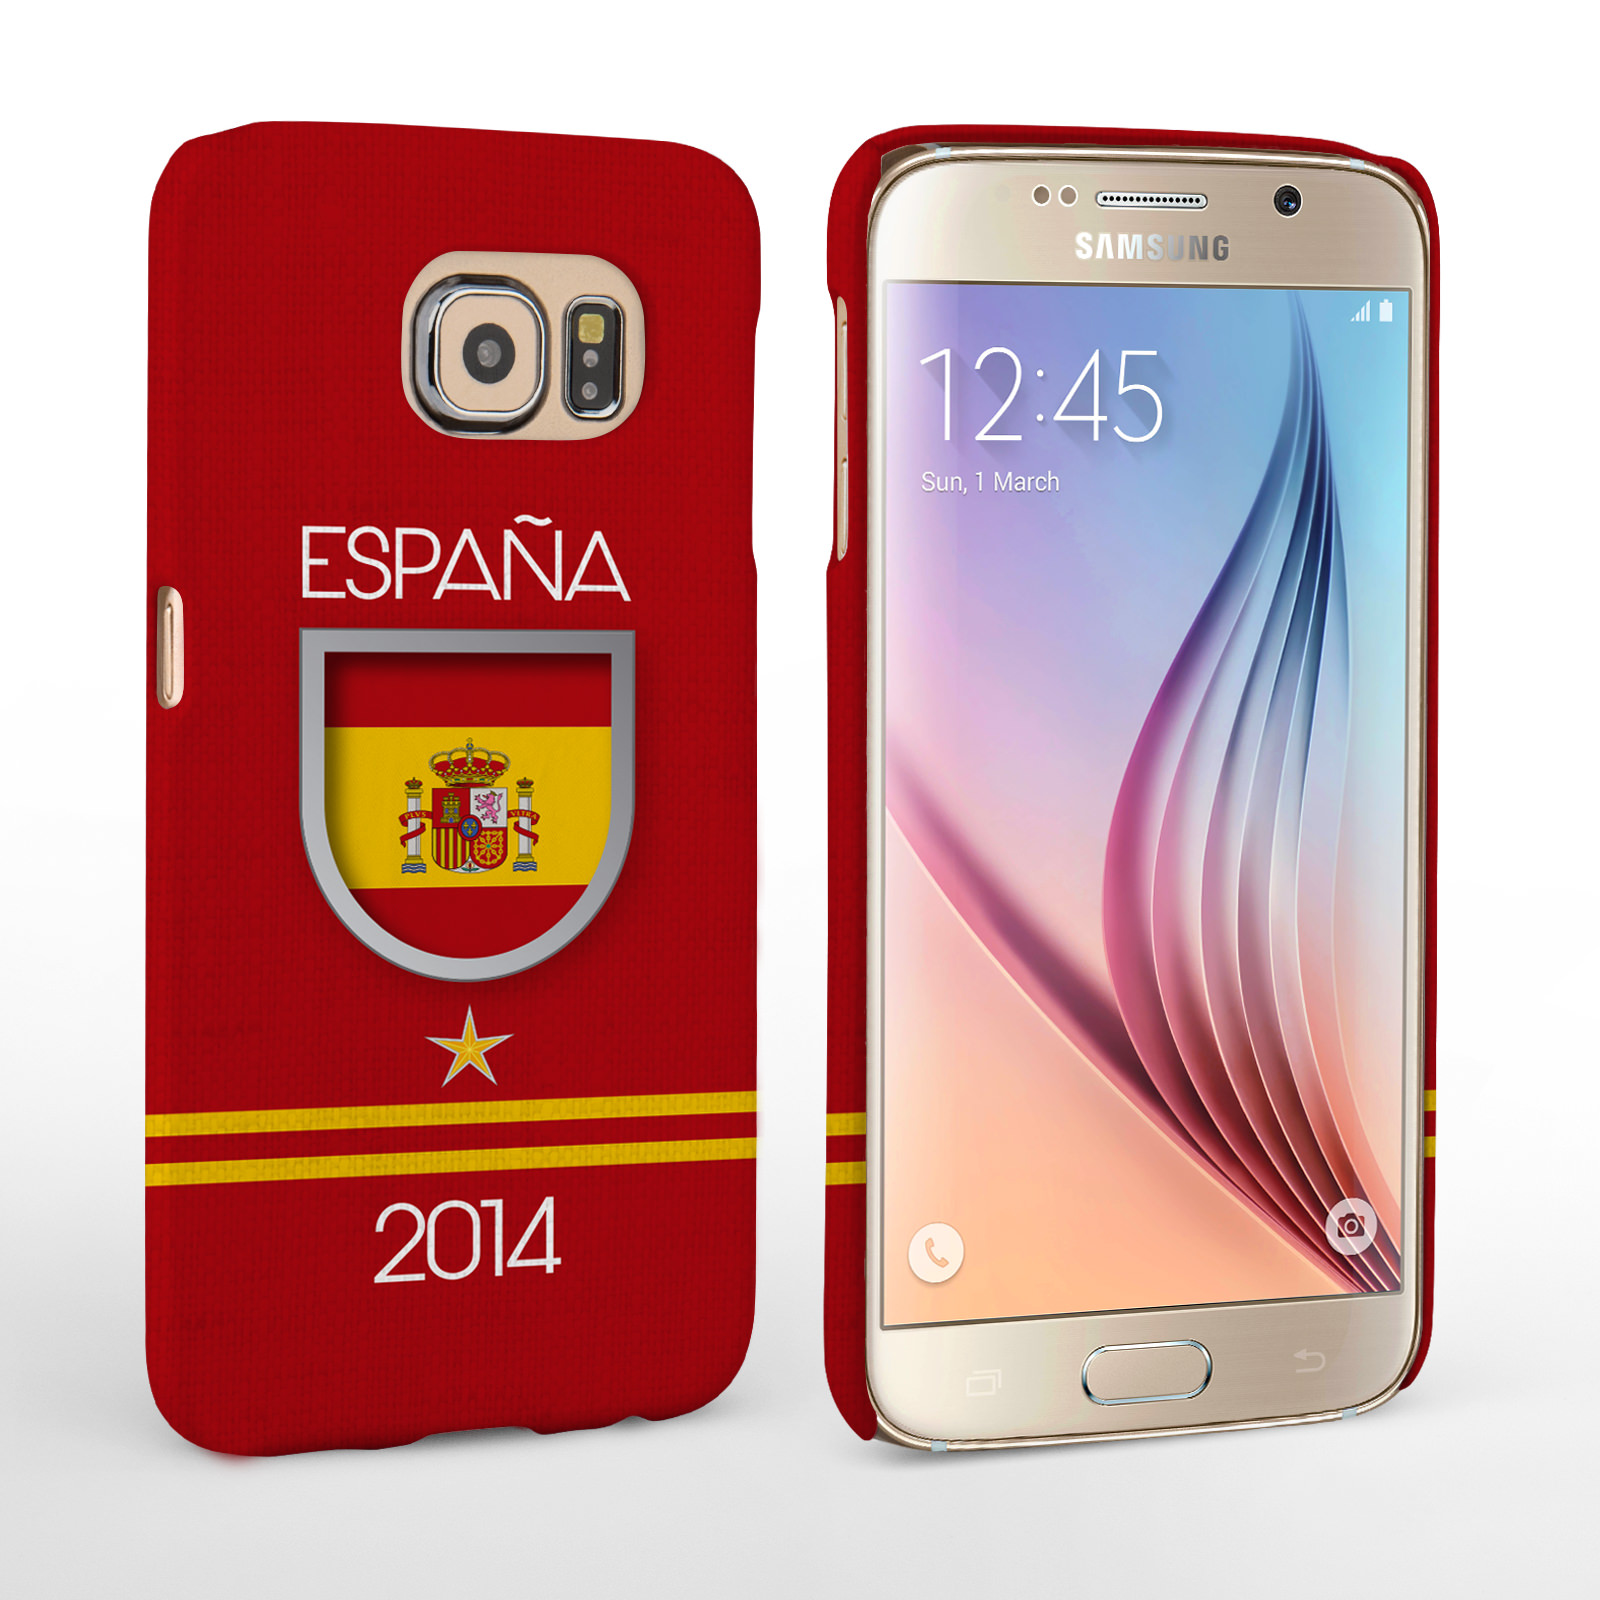 Caseflex Samsung Galaxy S6 Espana World Cup Case